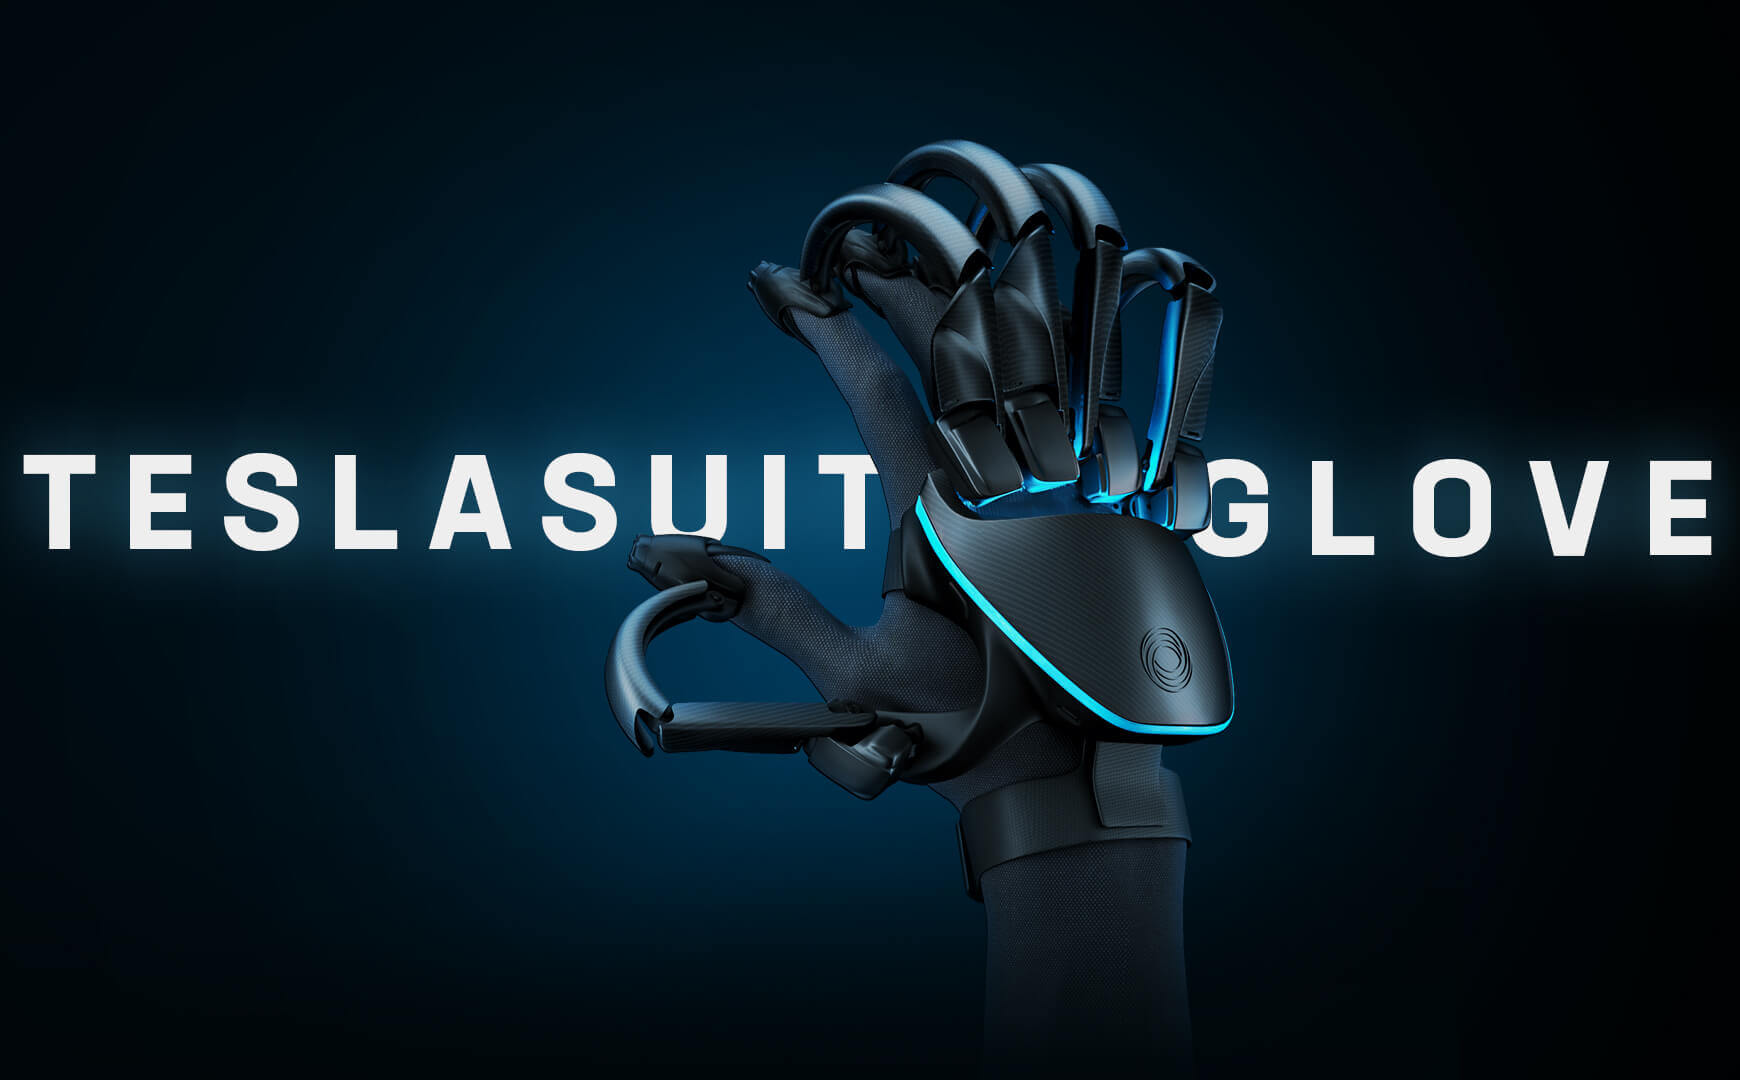 TESLASUIT Introduces its Brand-New Teslasuit Blog